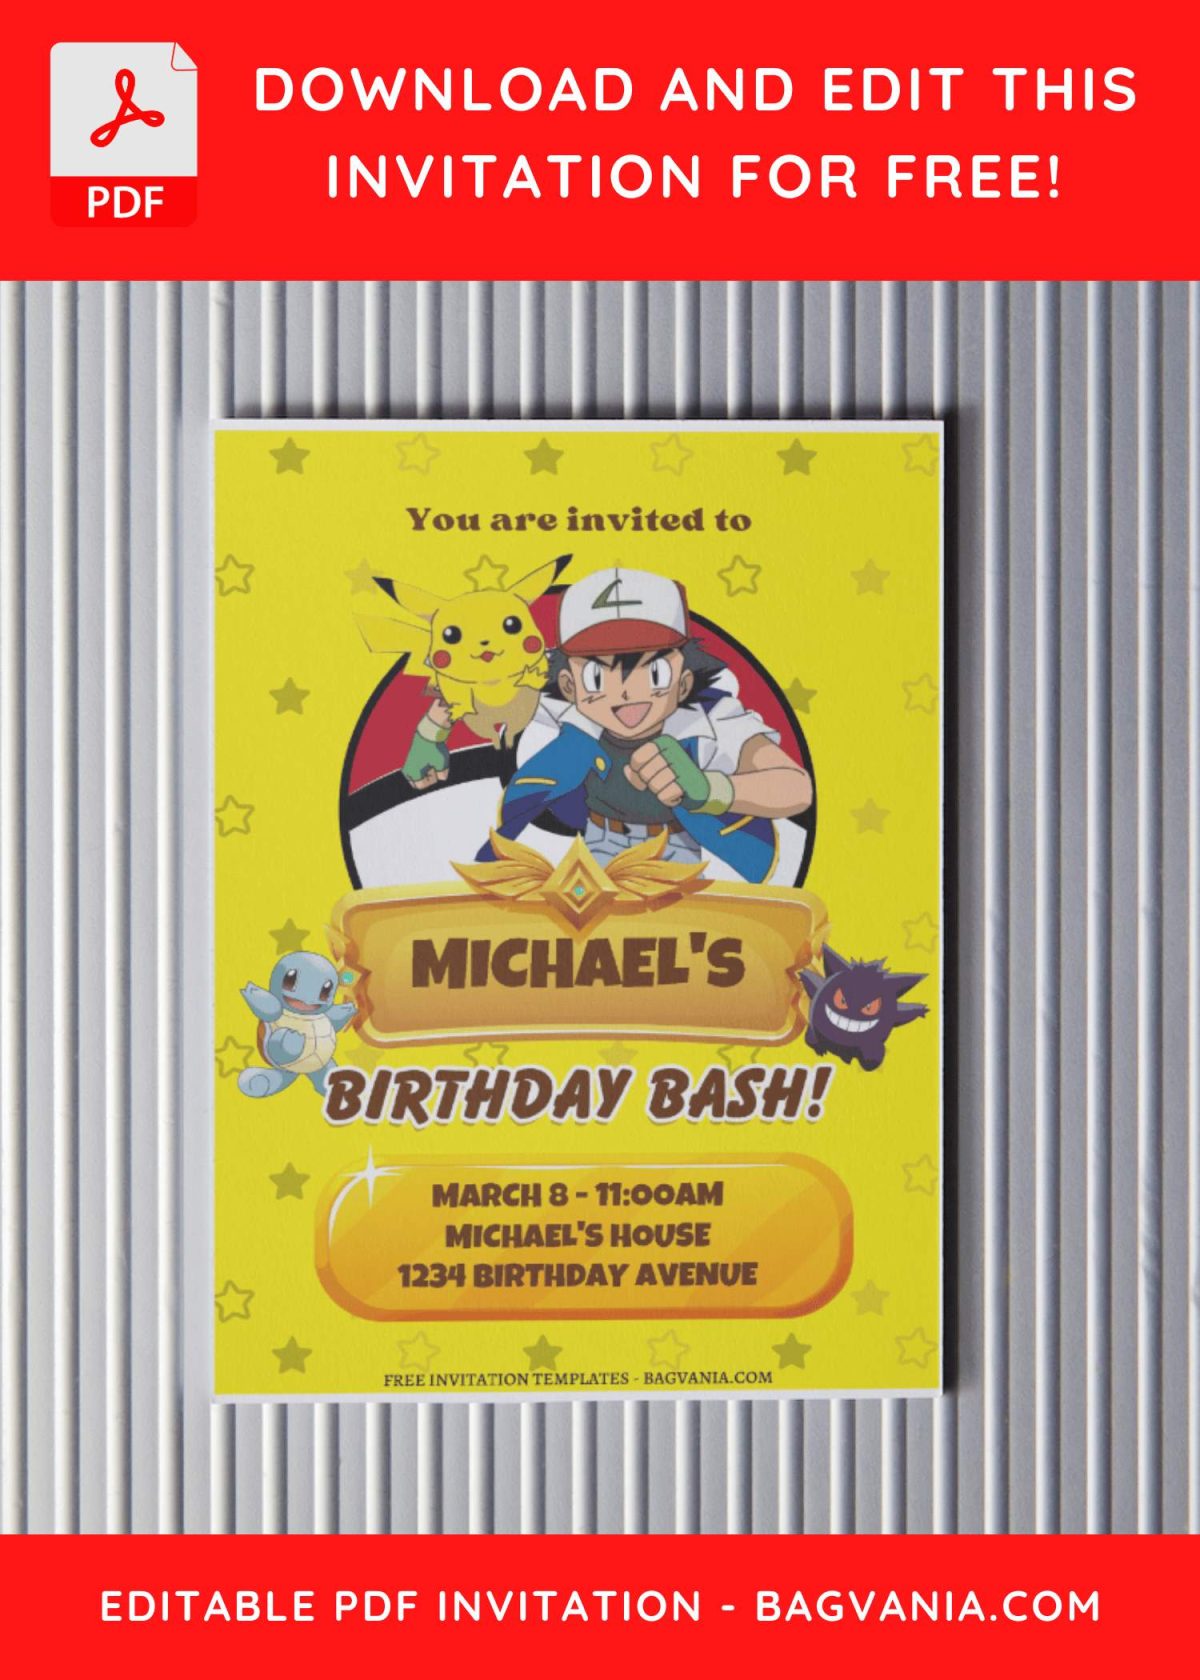 (Free Editable PDF) A Galaxy Of Fun Pokemon Themed Birthday Invitation Templates with yellow background